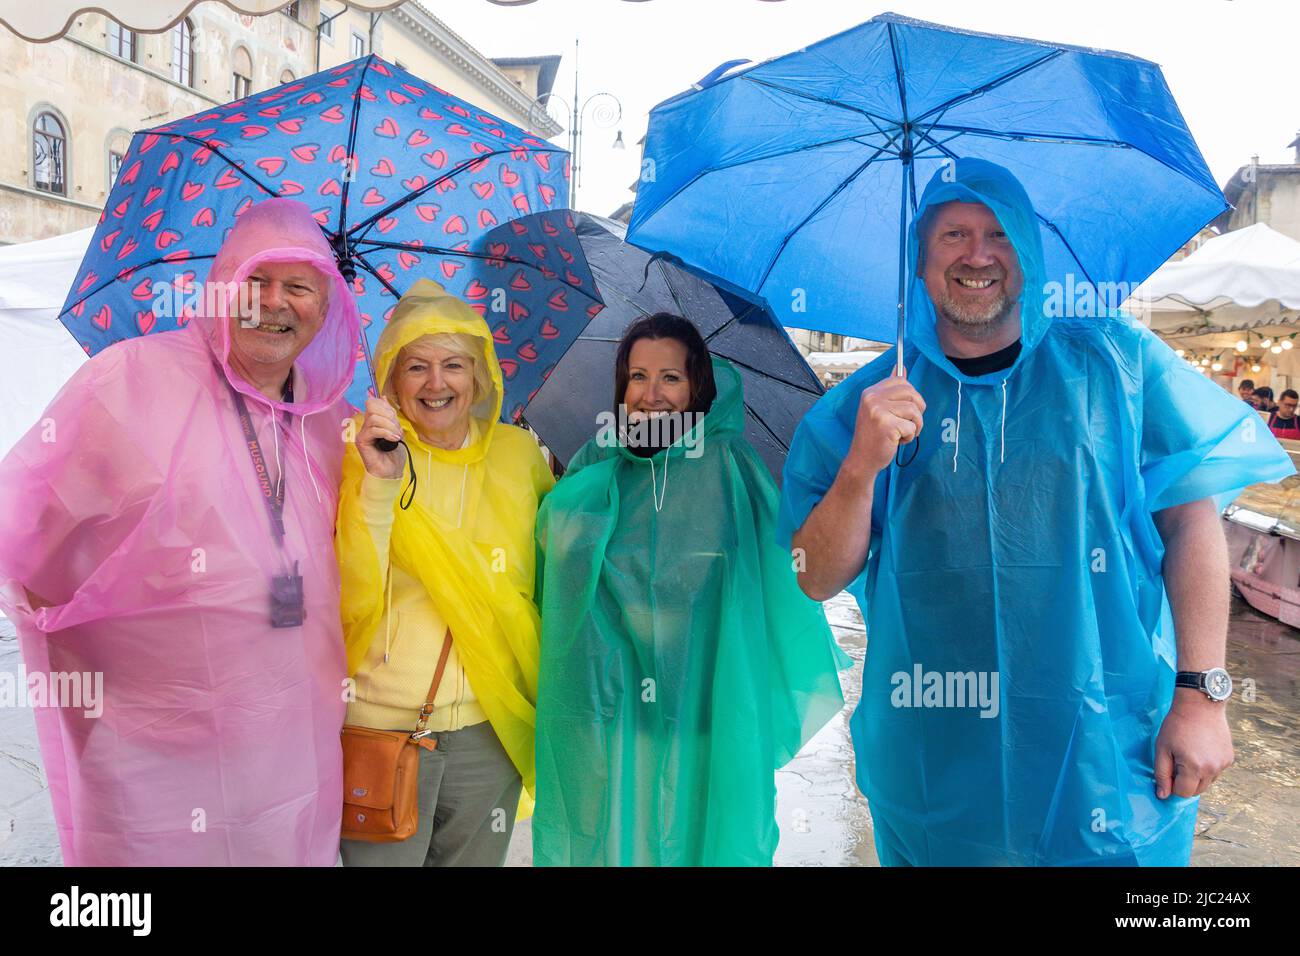 Grupo familiar bajo la lluvia con coloridos impermeables y sombrillas, Piazza di Santa Croce, Florencia (Florencia), Toscana, Italia Foto de stock